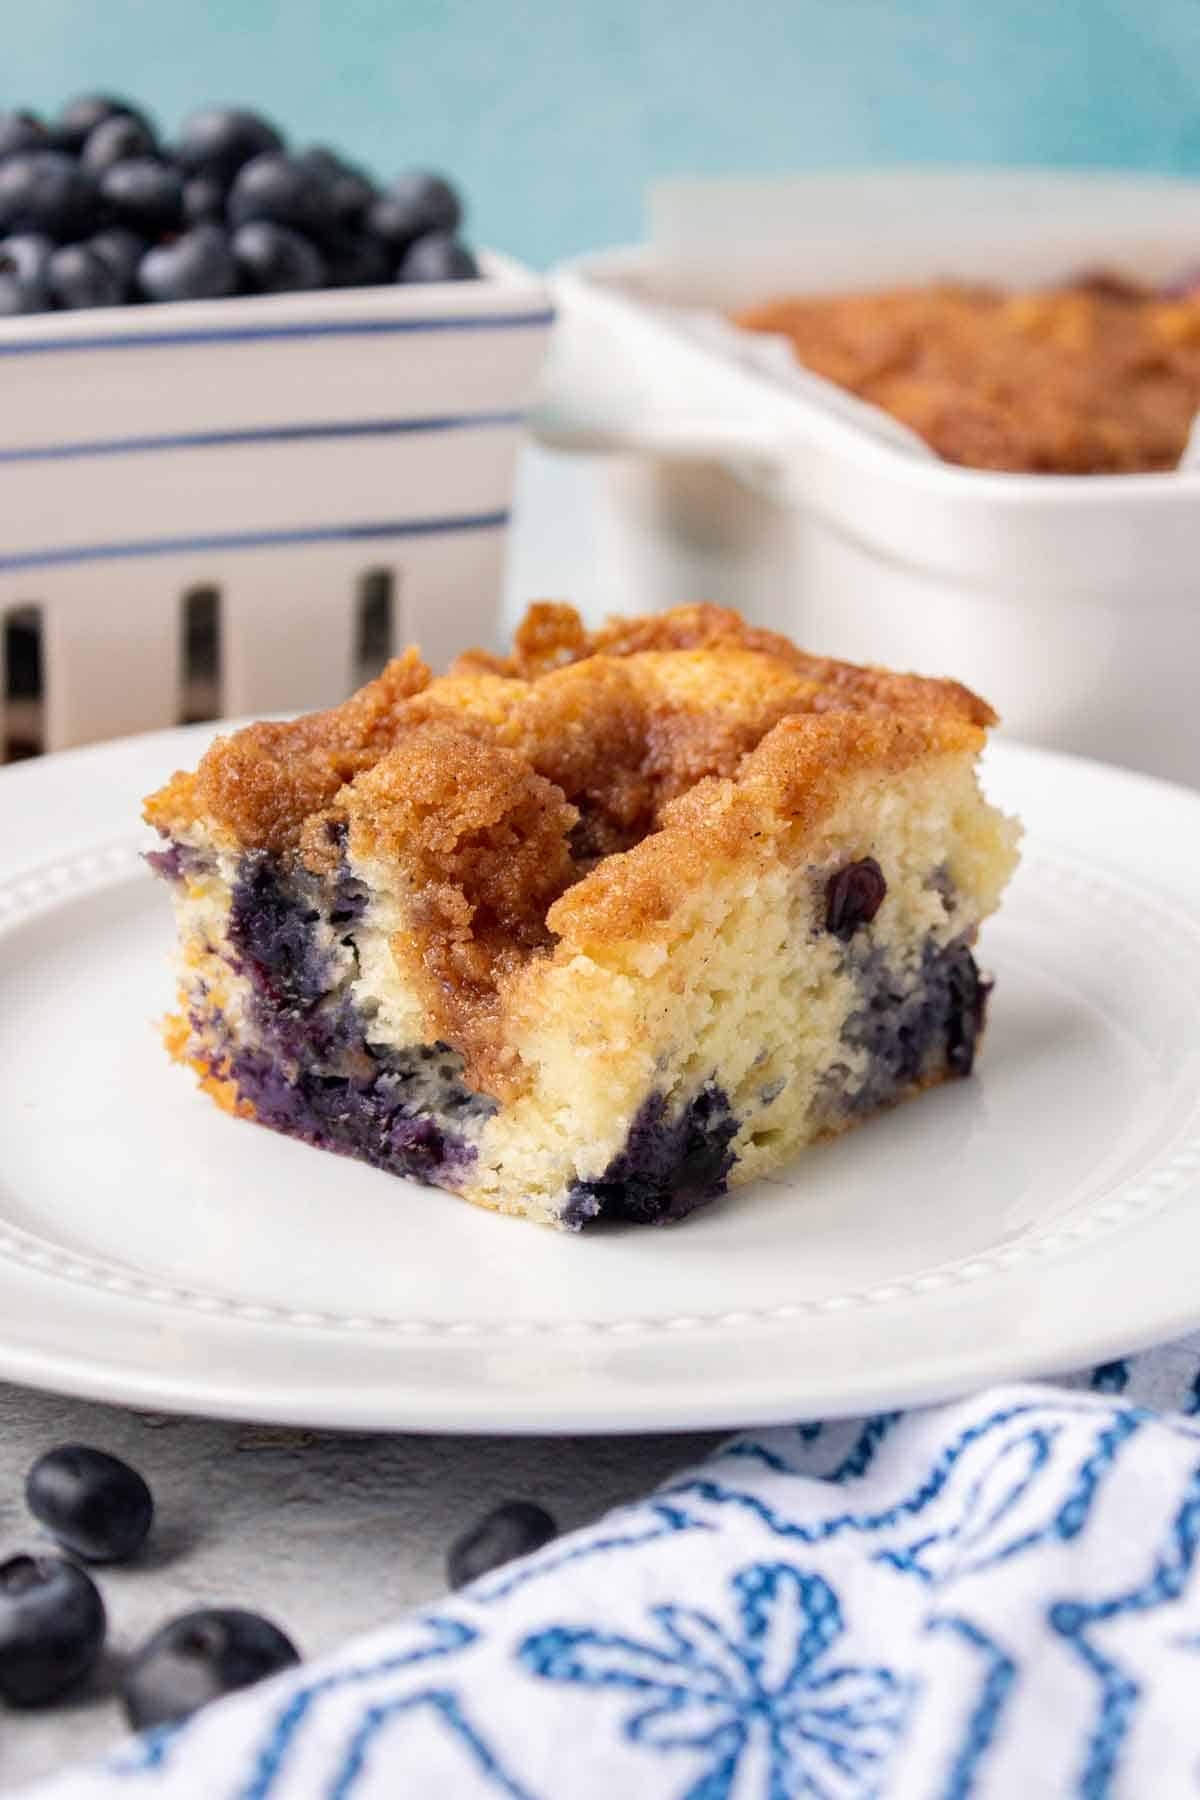 Bisquick Blueberry Coffee Cake